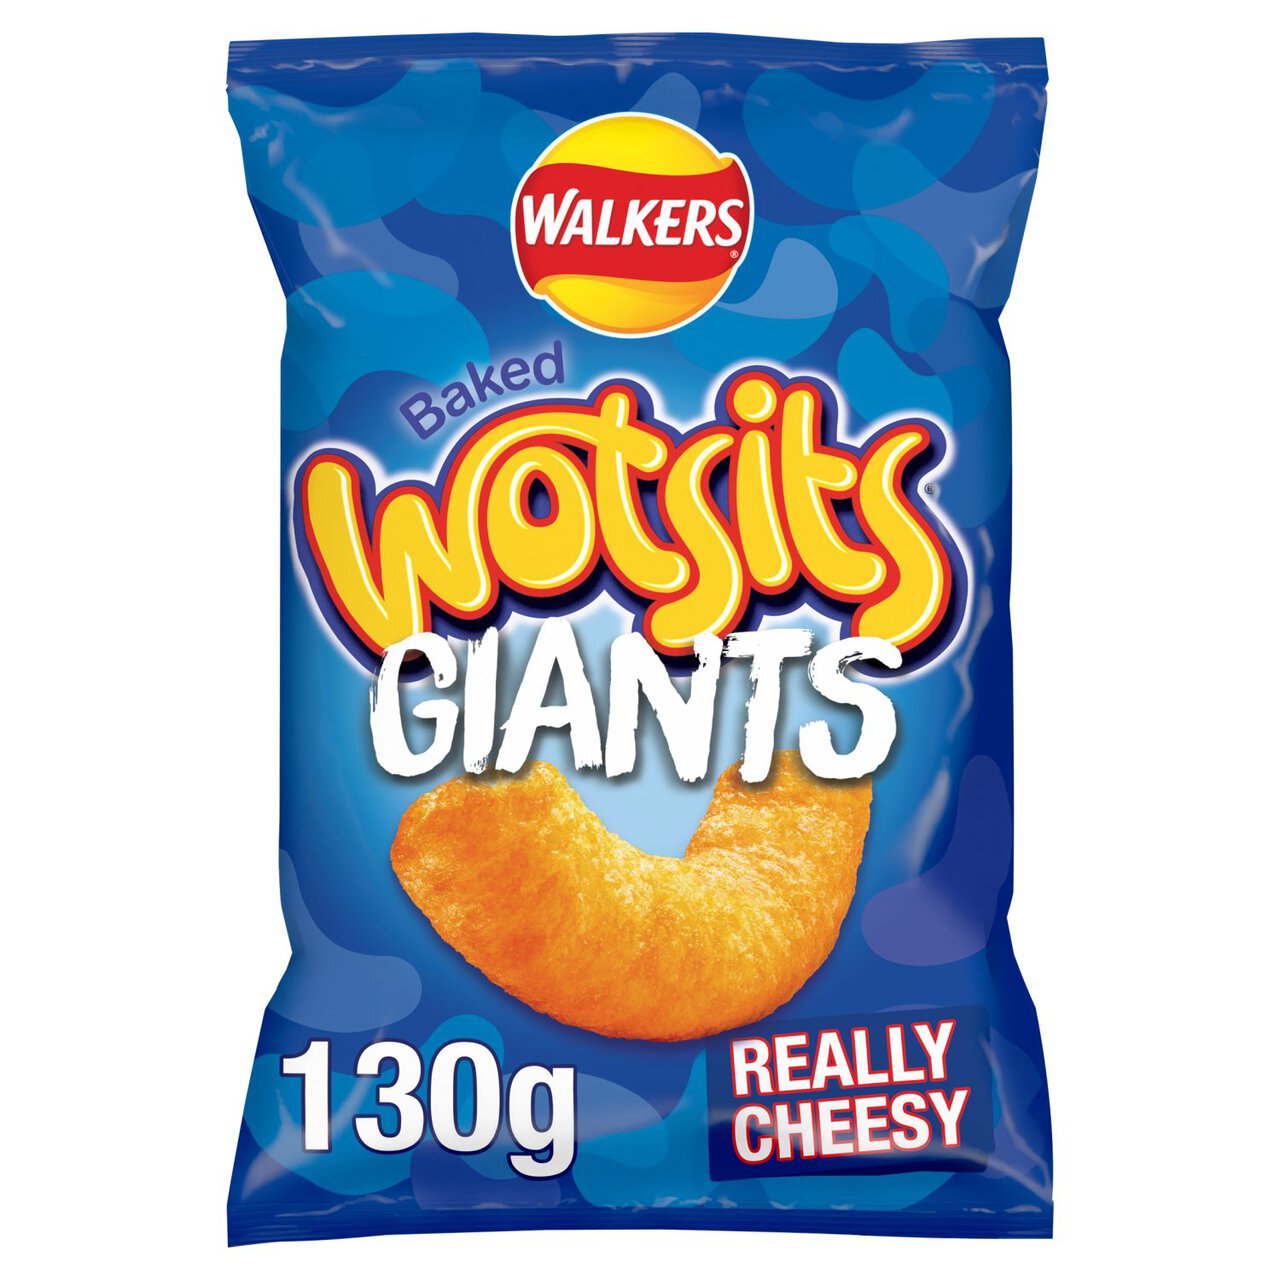 Walkers Wotsits Giants Cheese Sharing Bag Crisps 130g